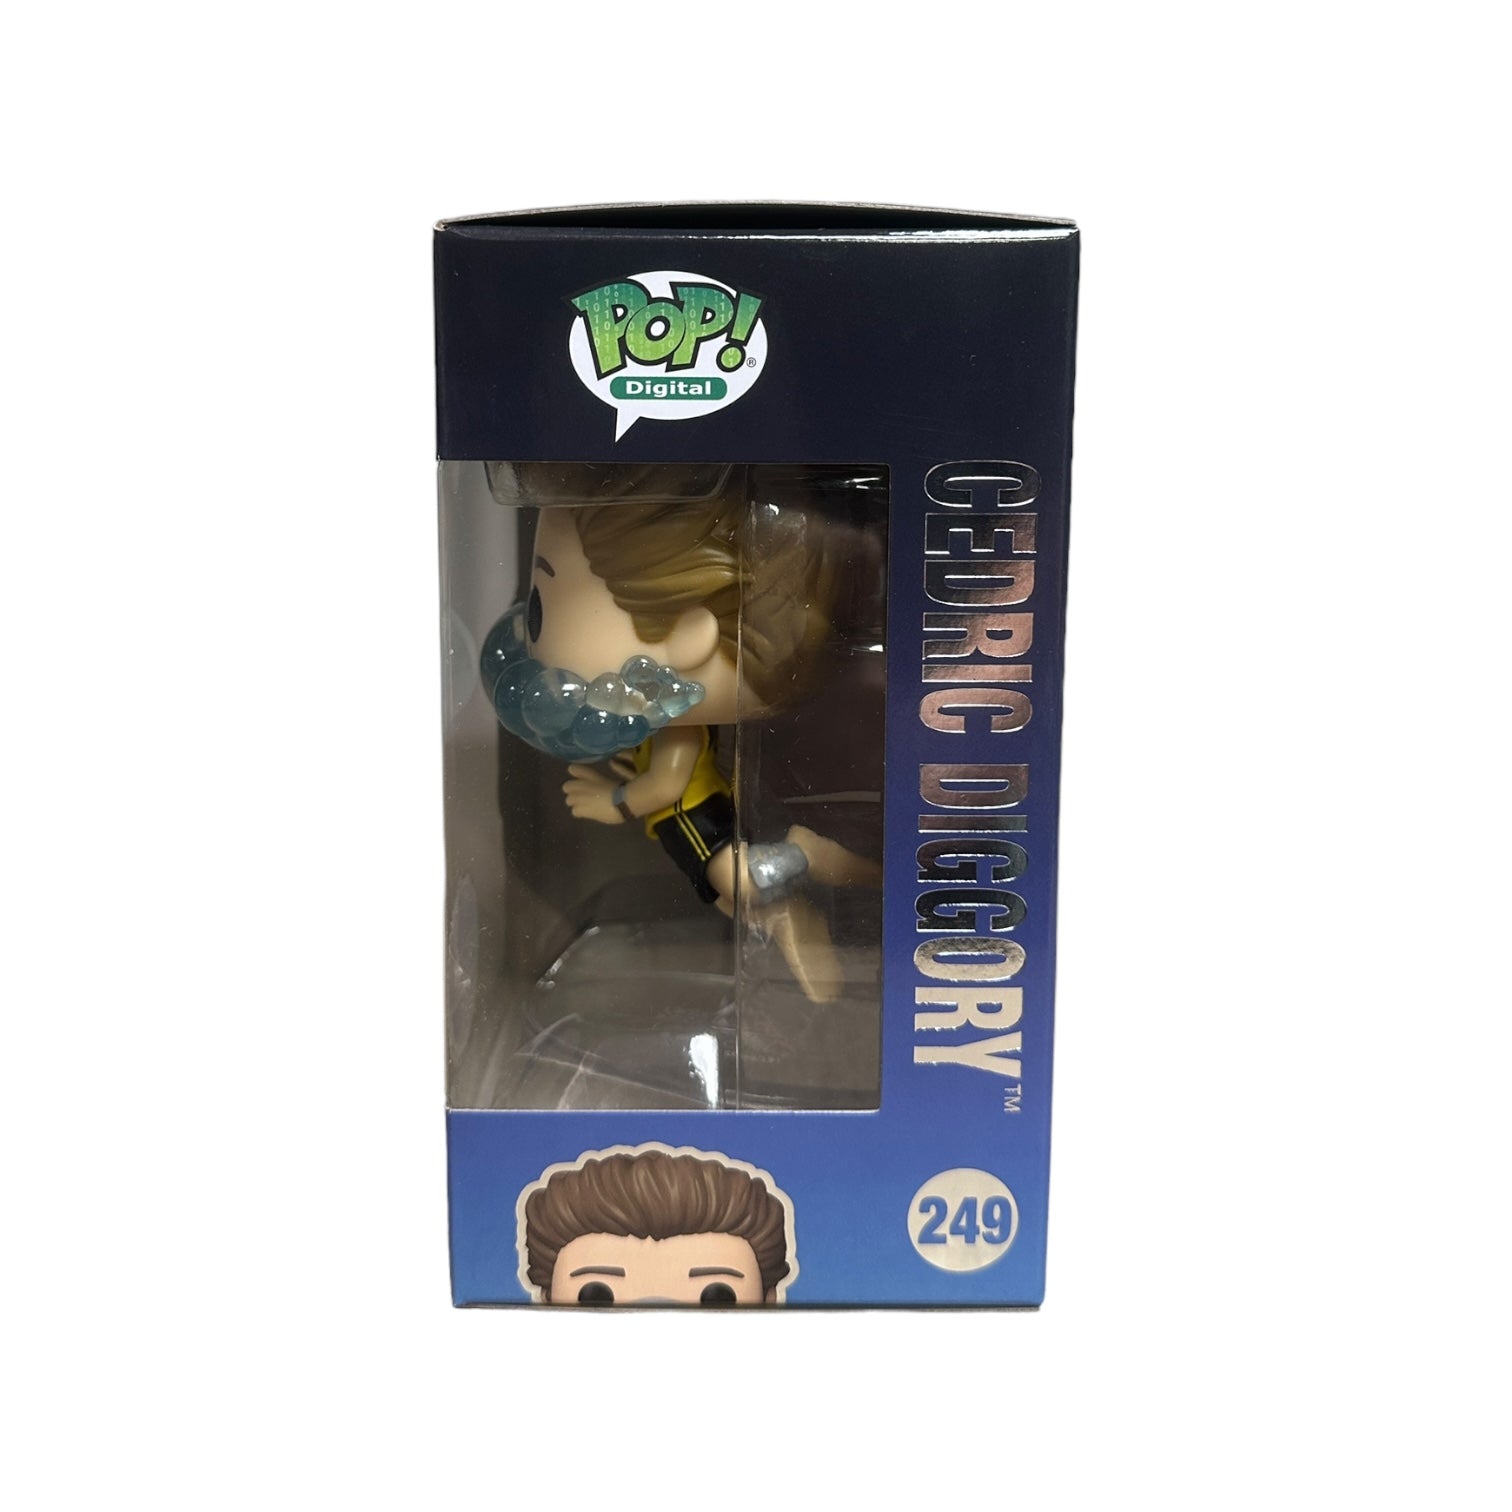 Cedric Diggory #249 (w/ Bubble-Head Air Mask) Funko Pop! - Harry Potter - NFT Release Exclusive LE2200 Pcs - Condition 9/10